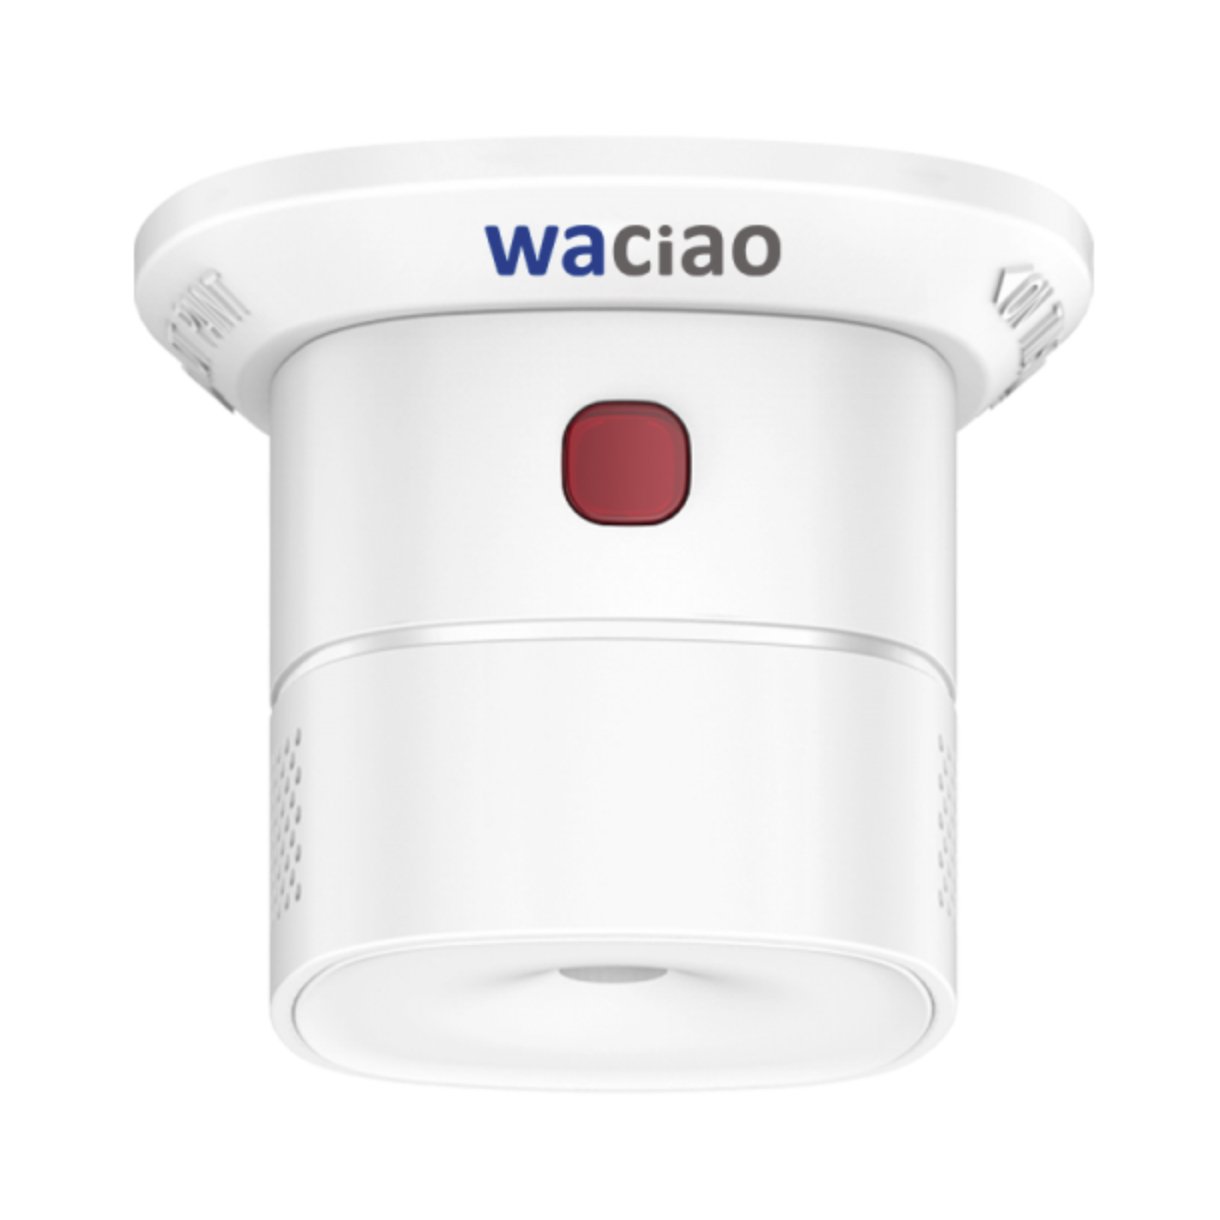 Waciao Smart Carbon Monoxide Sensor